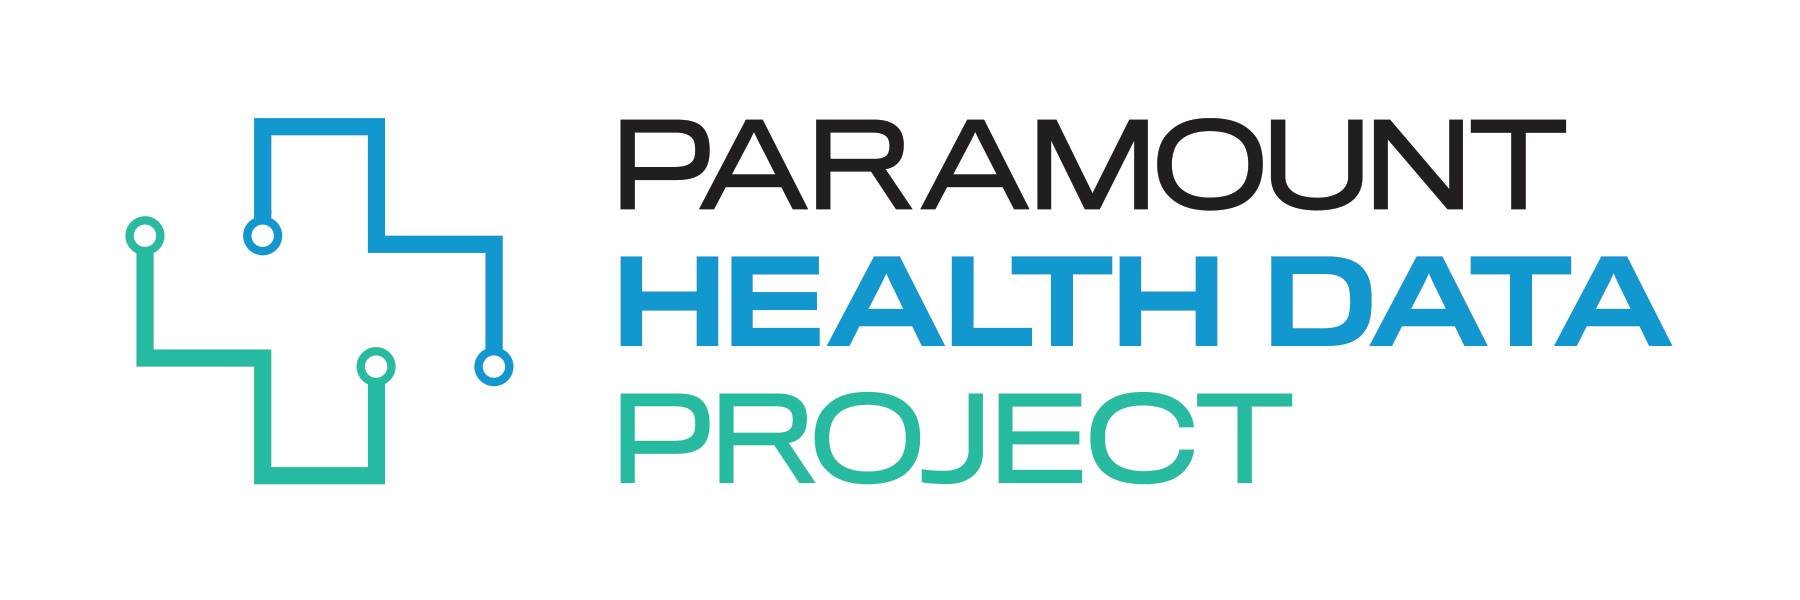 Paramount Health Data Project.jpeg